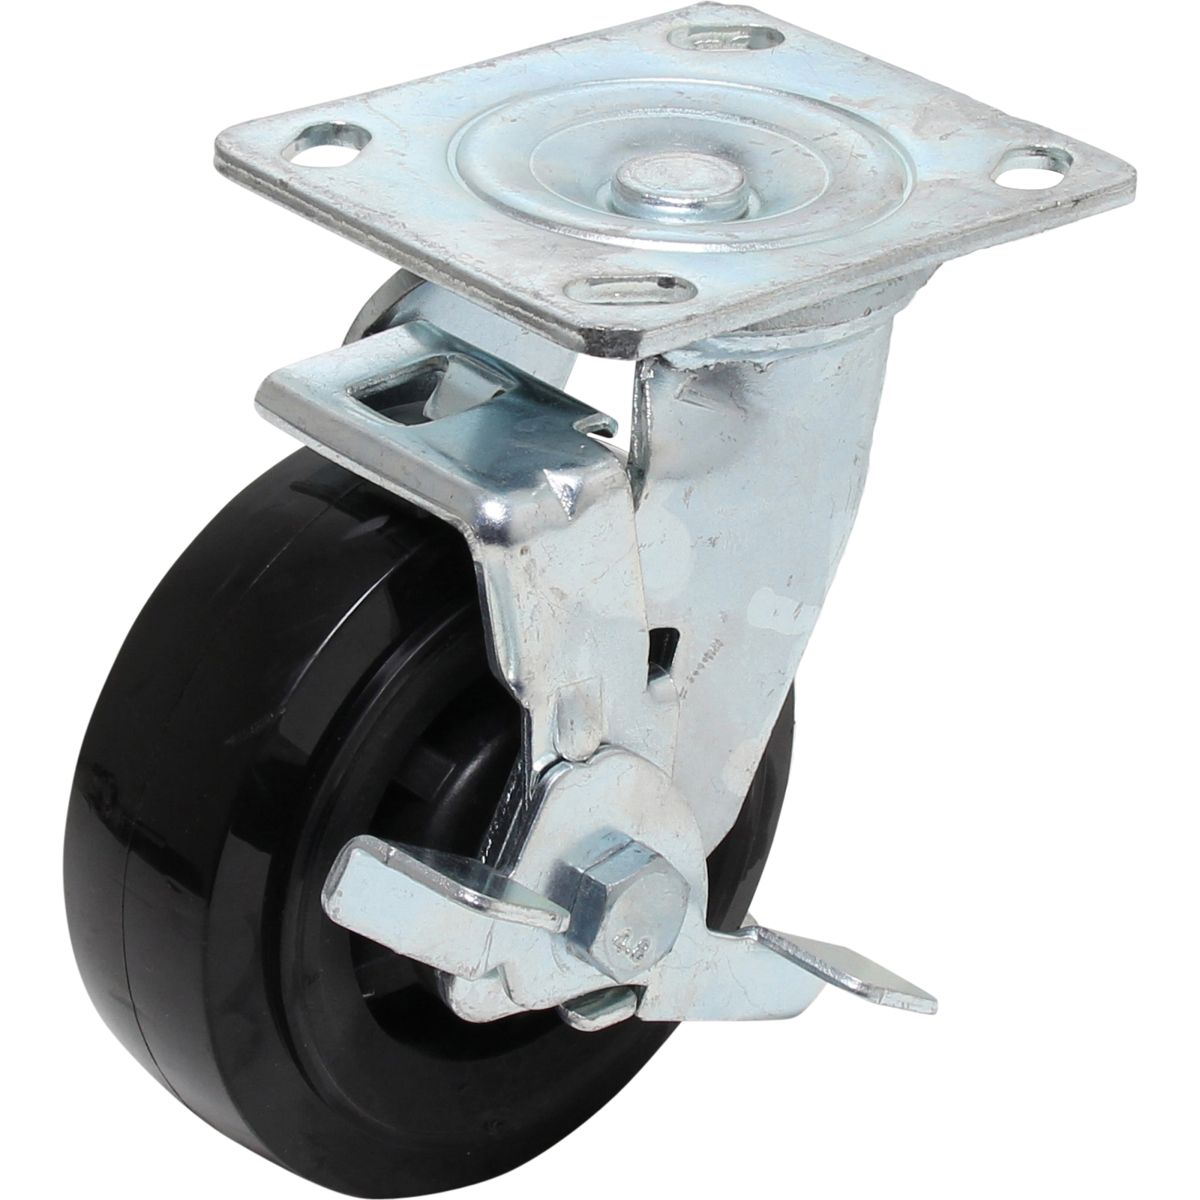 Caster Wheel for Workshop Trolley BGS 4100